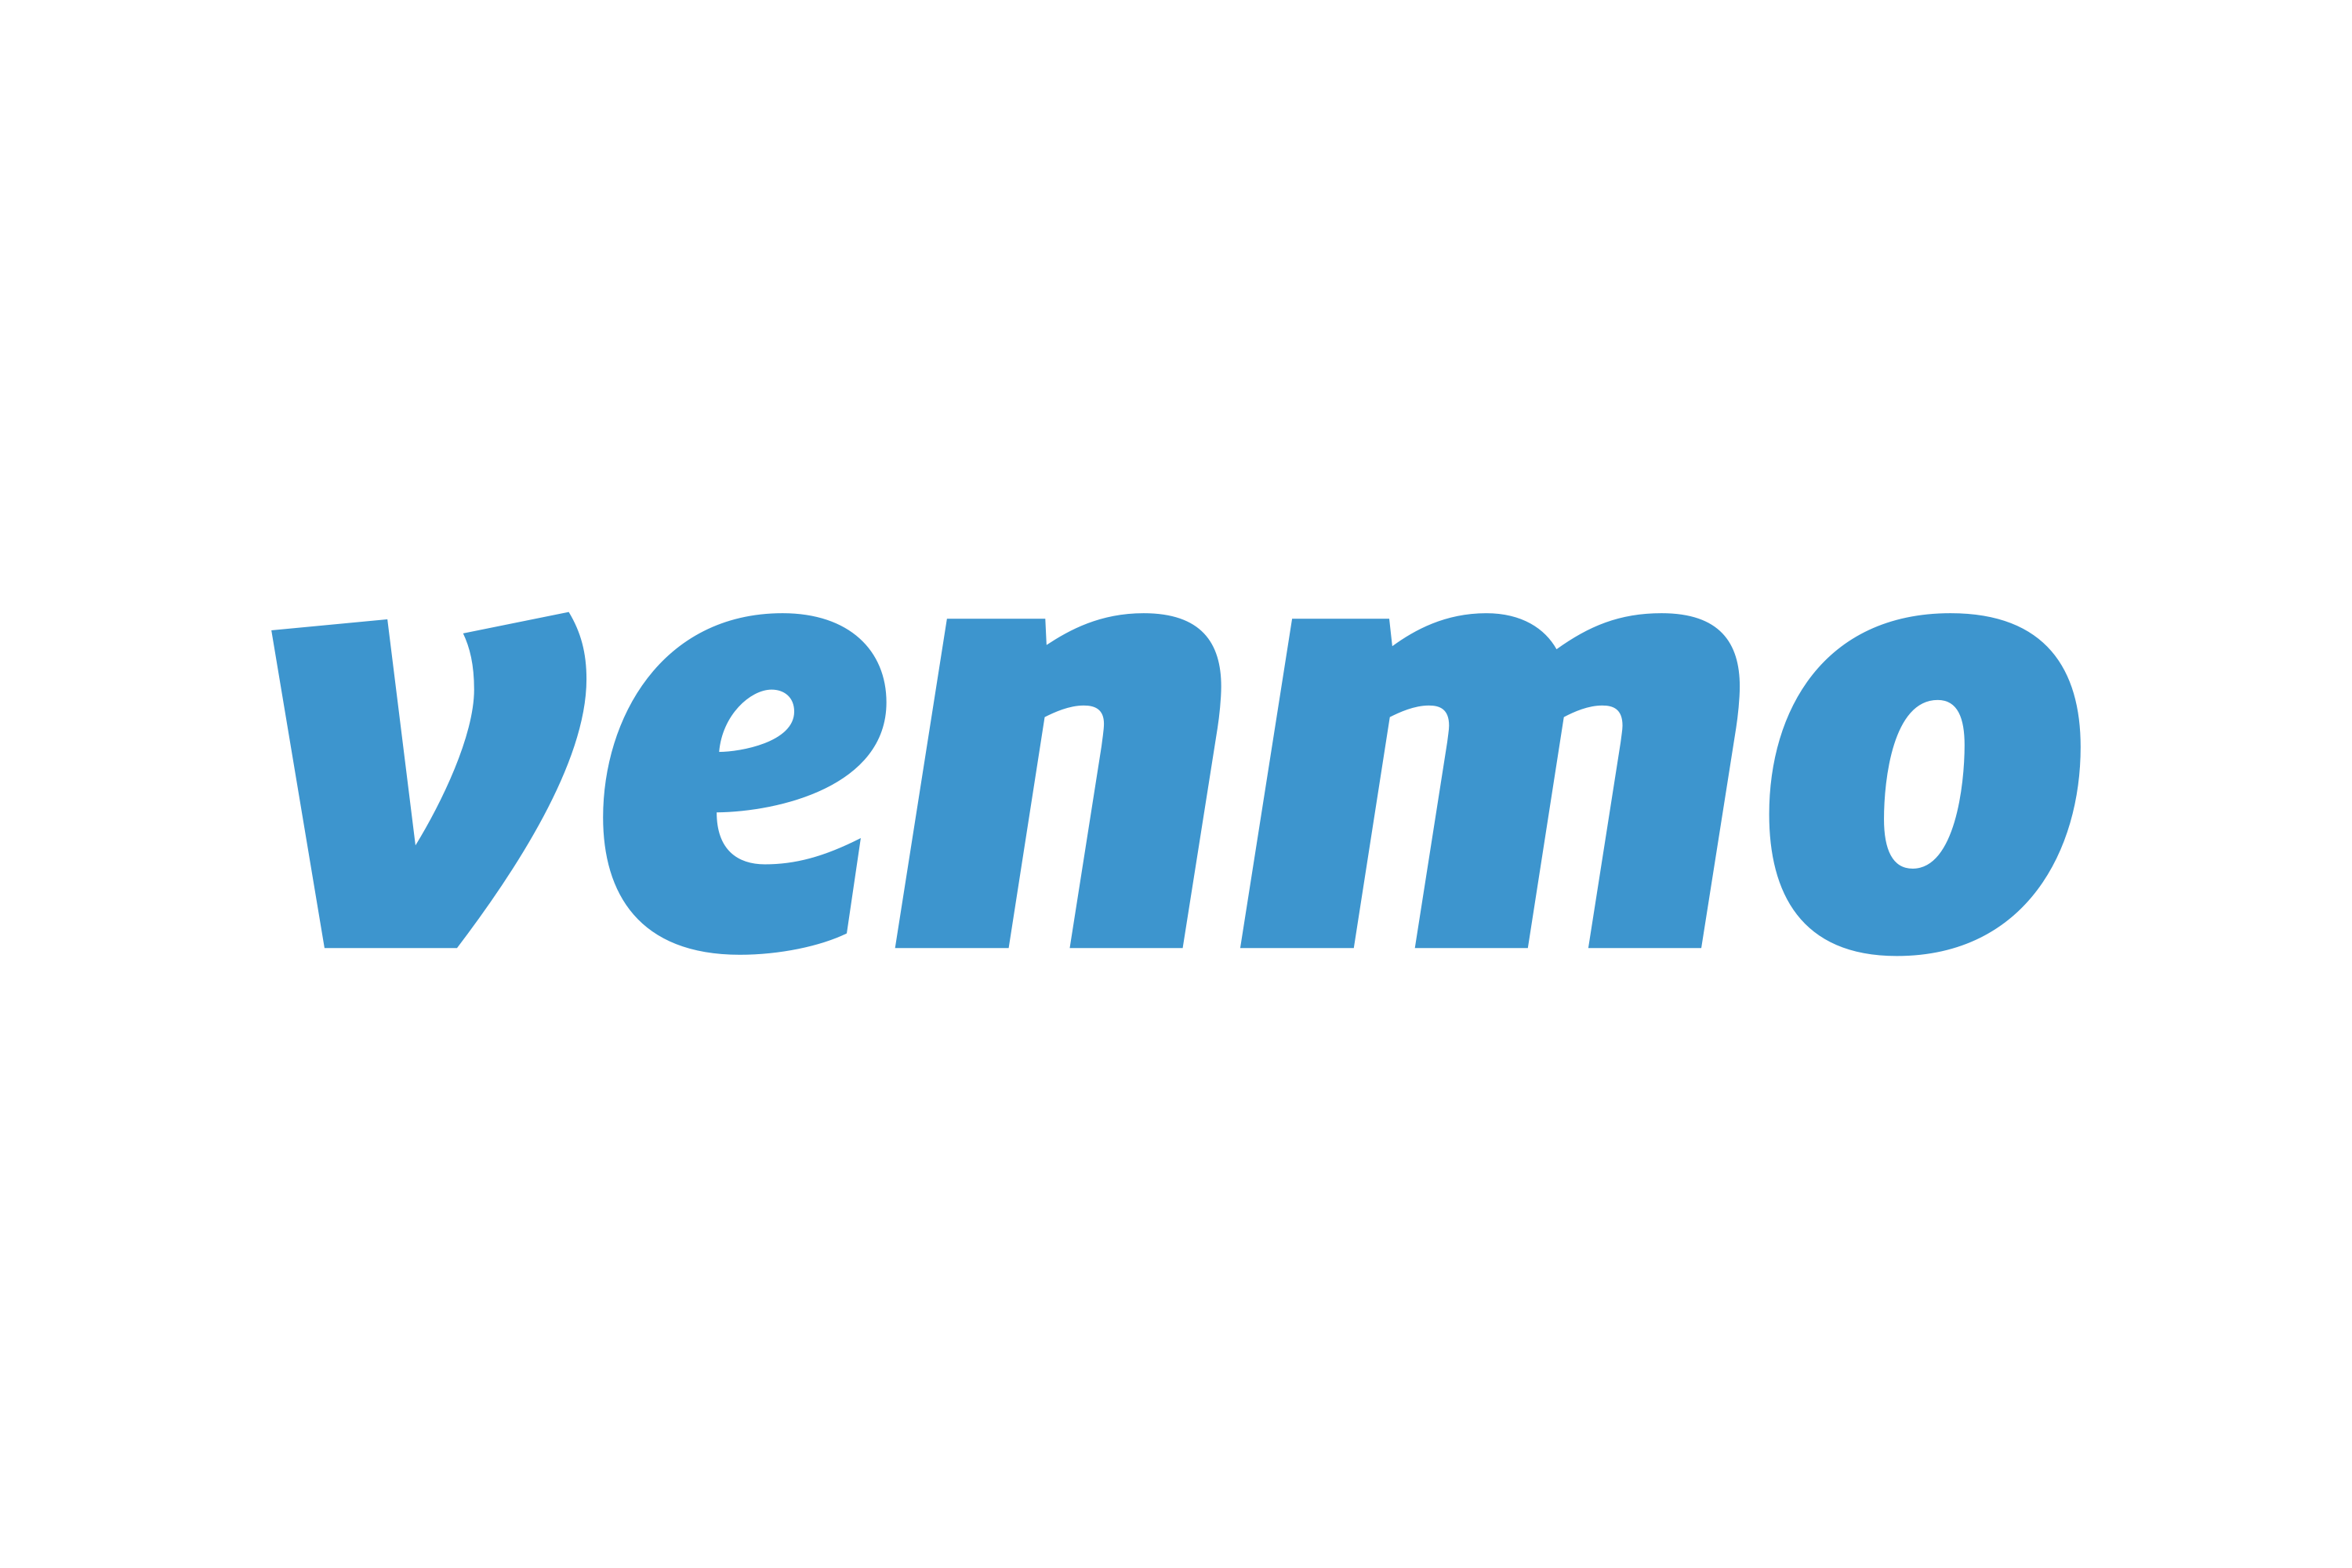 Download Venmo Logo in SVG Vector or PNG File Format